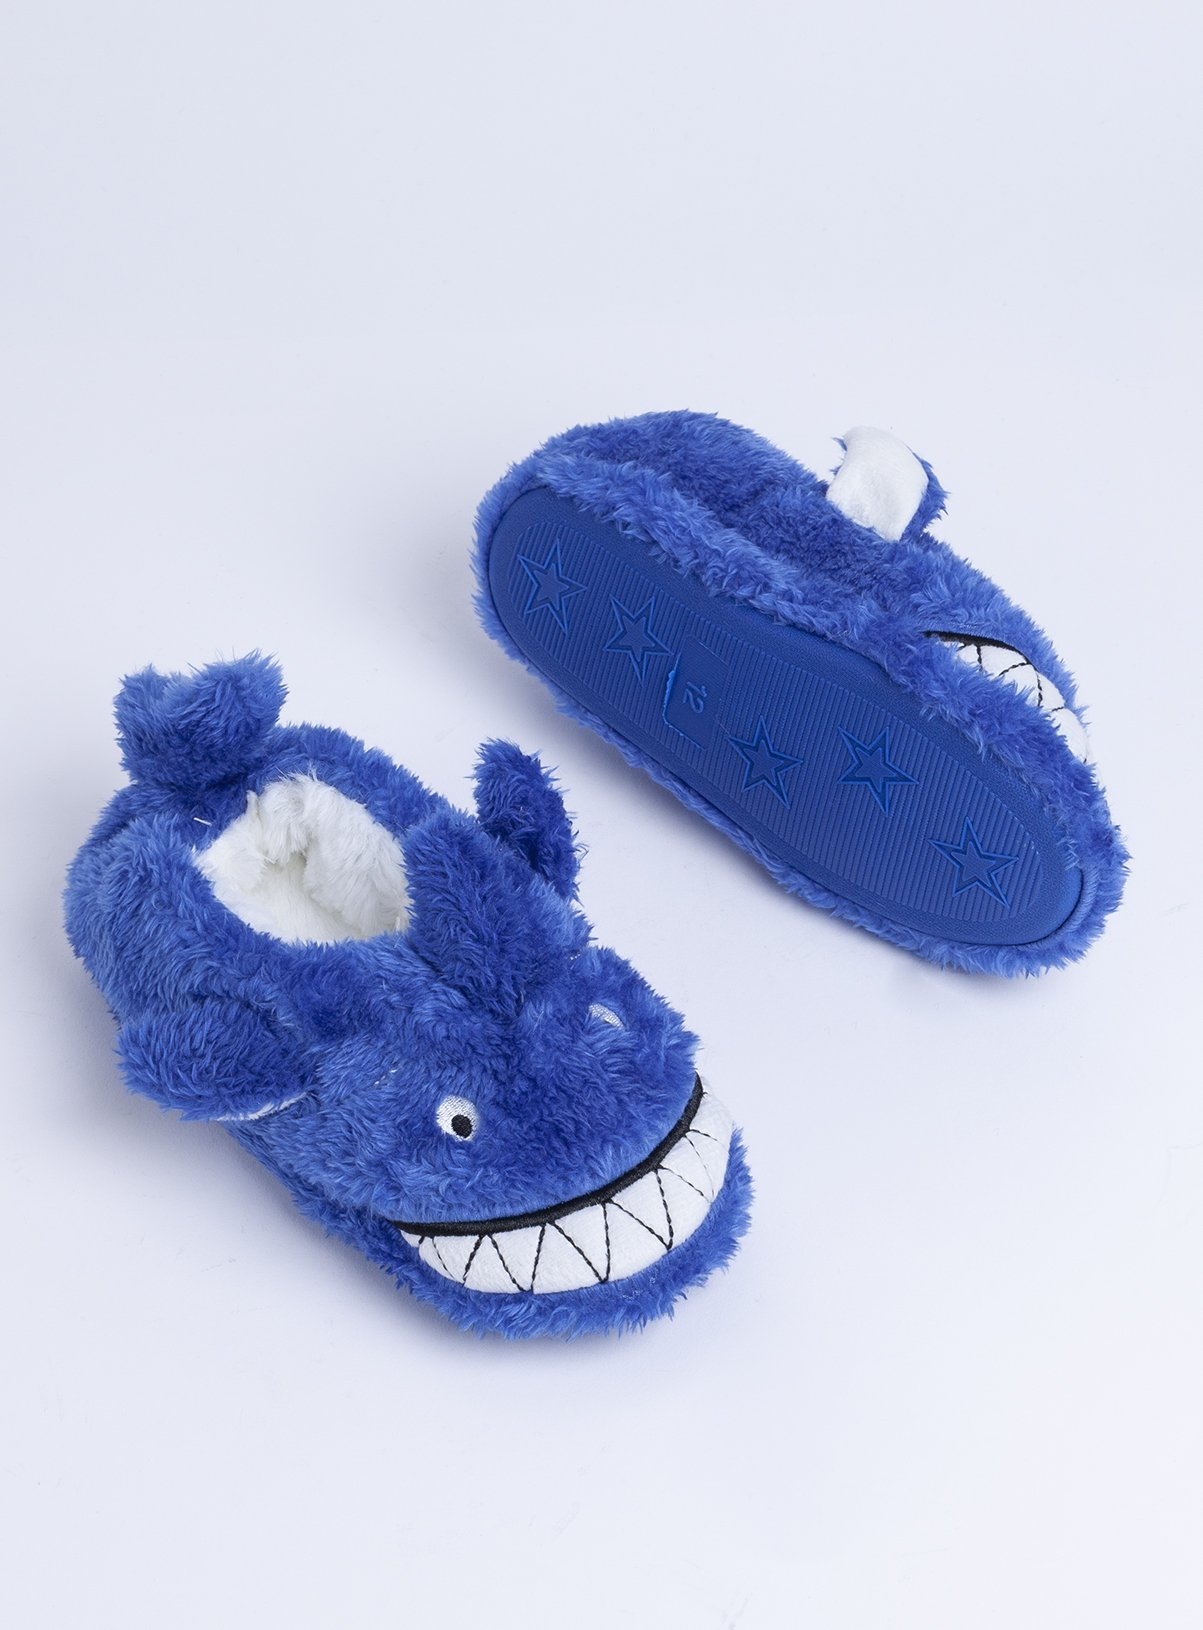 sainsburys childrens slippers